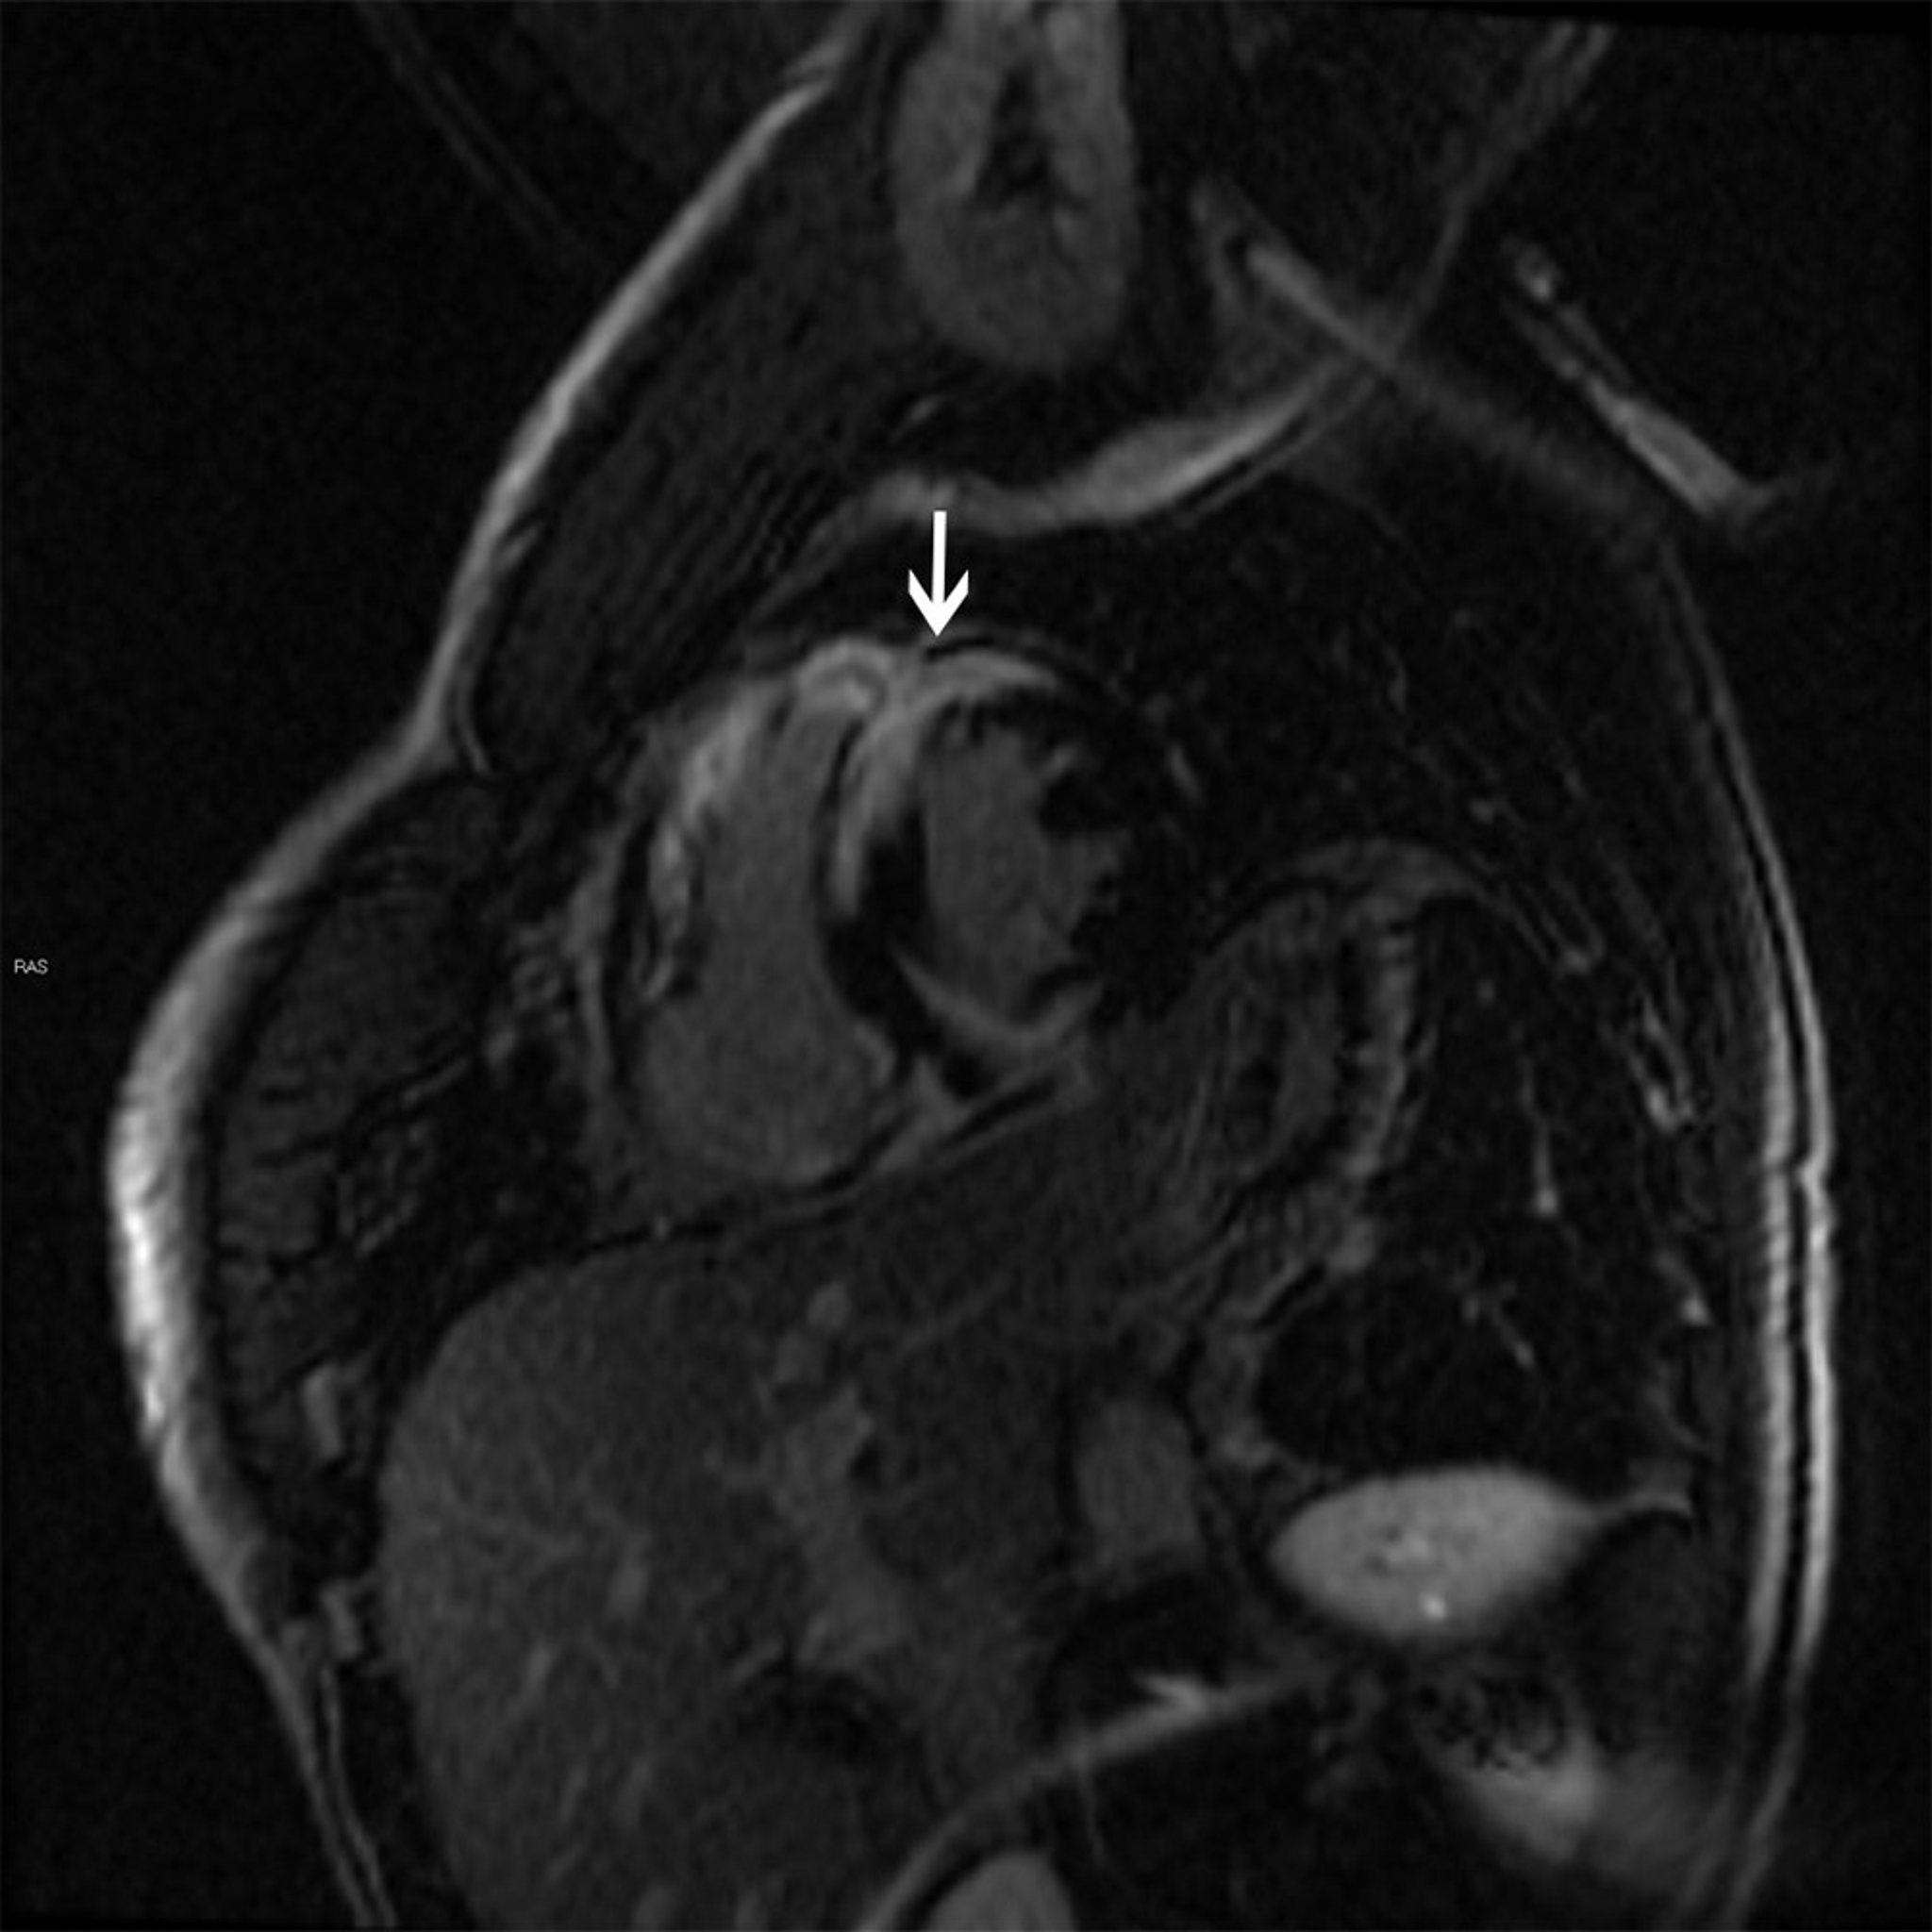 MRI Findings of Cardiac Sarcoidosis